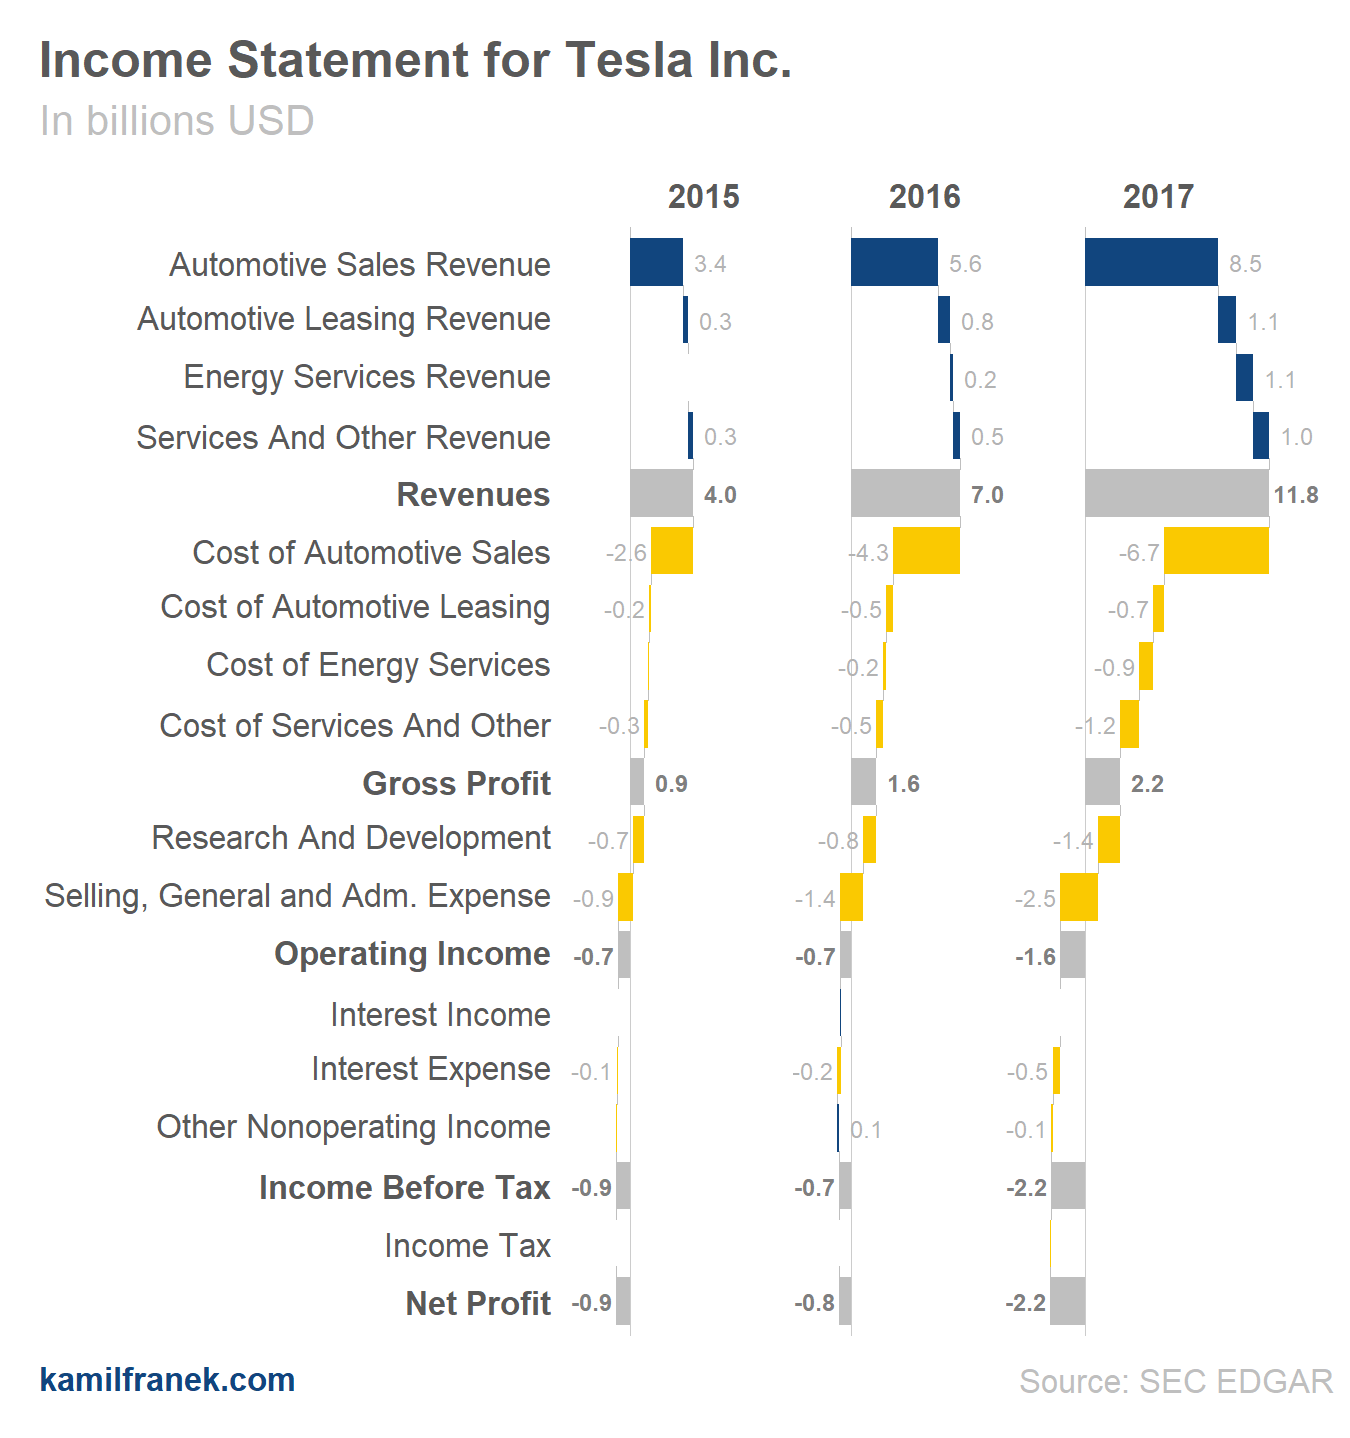 Raw Waterfall Income Statement Visualization for Tesla Inc